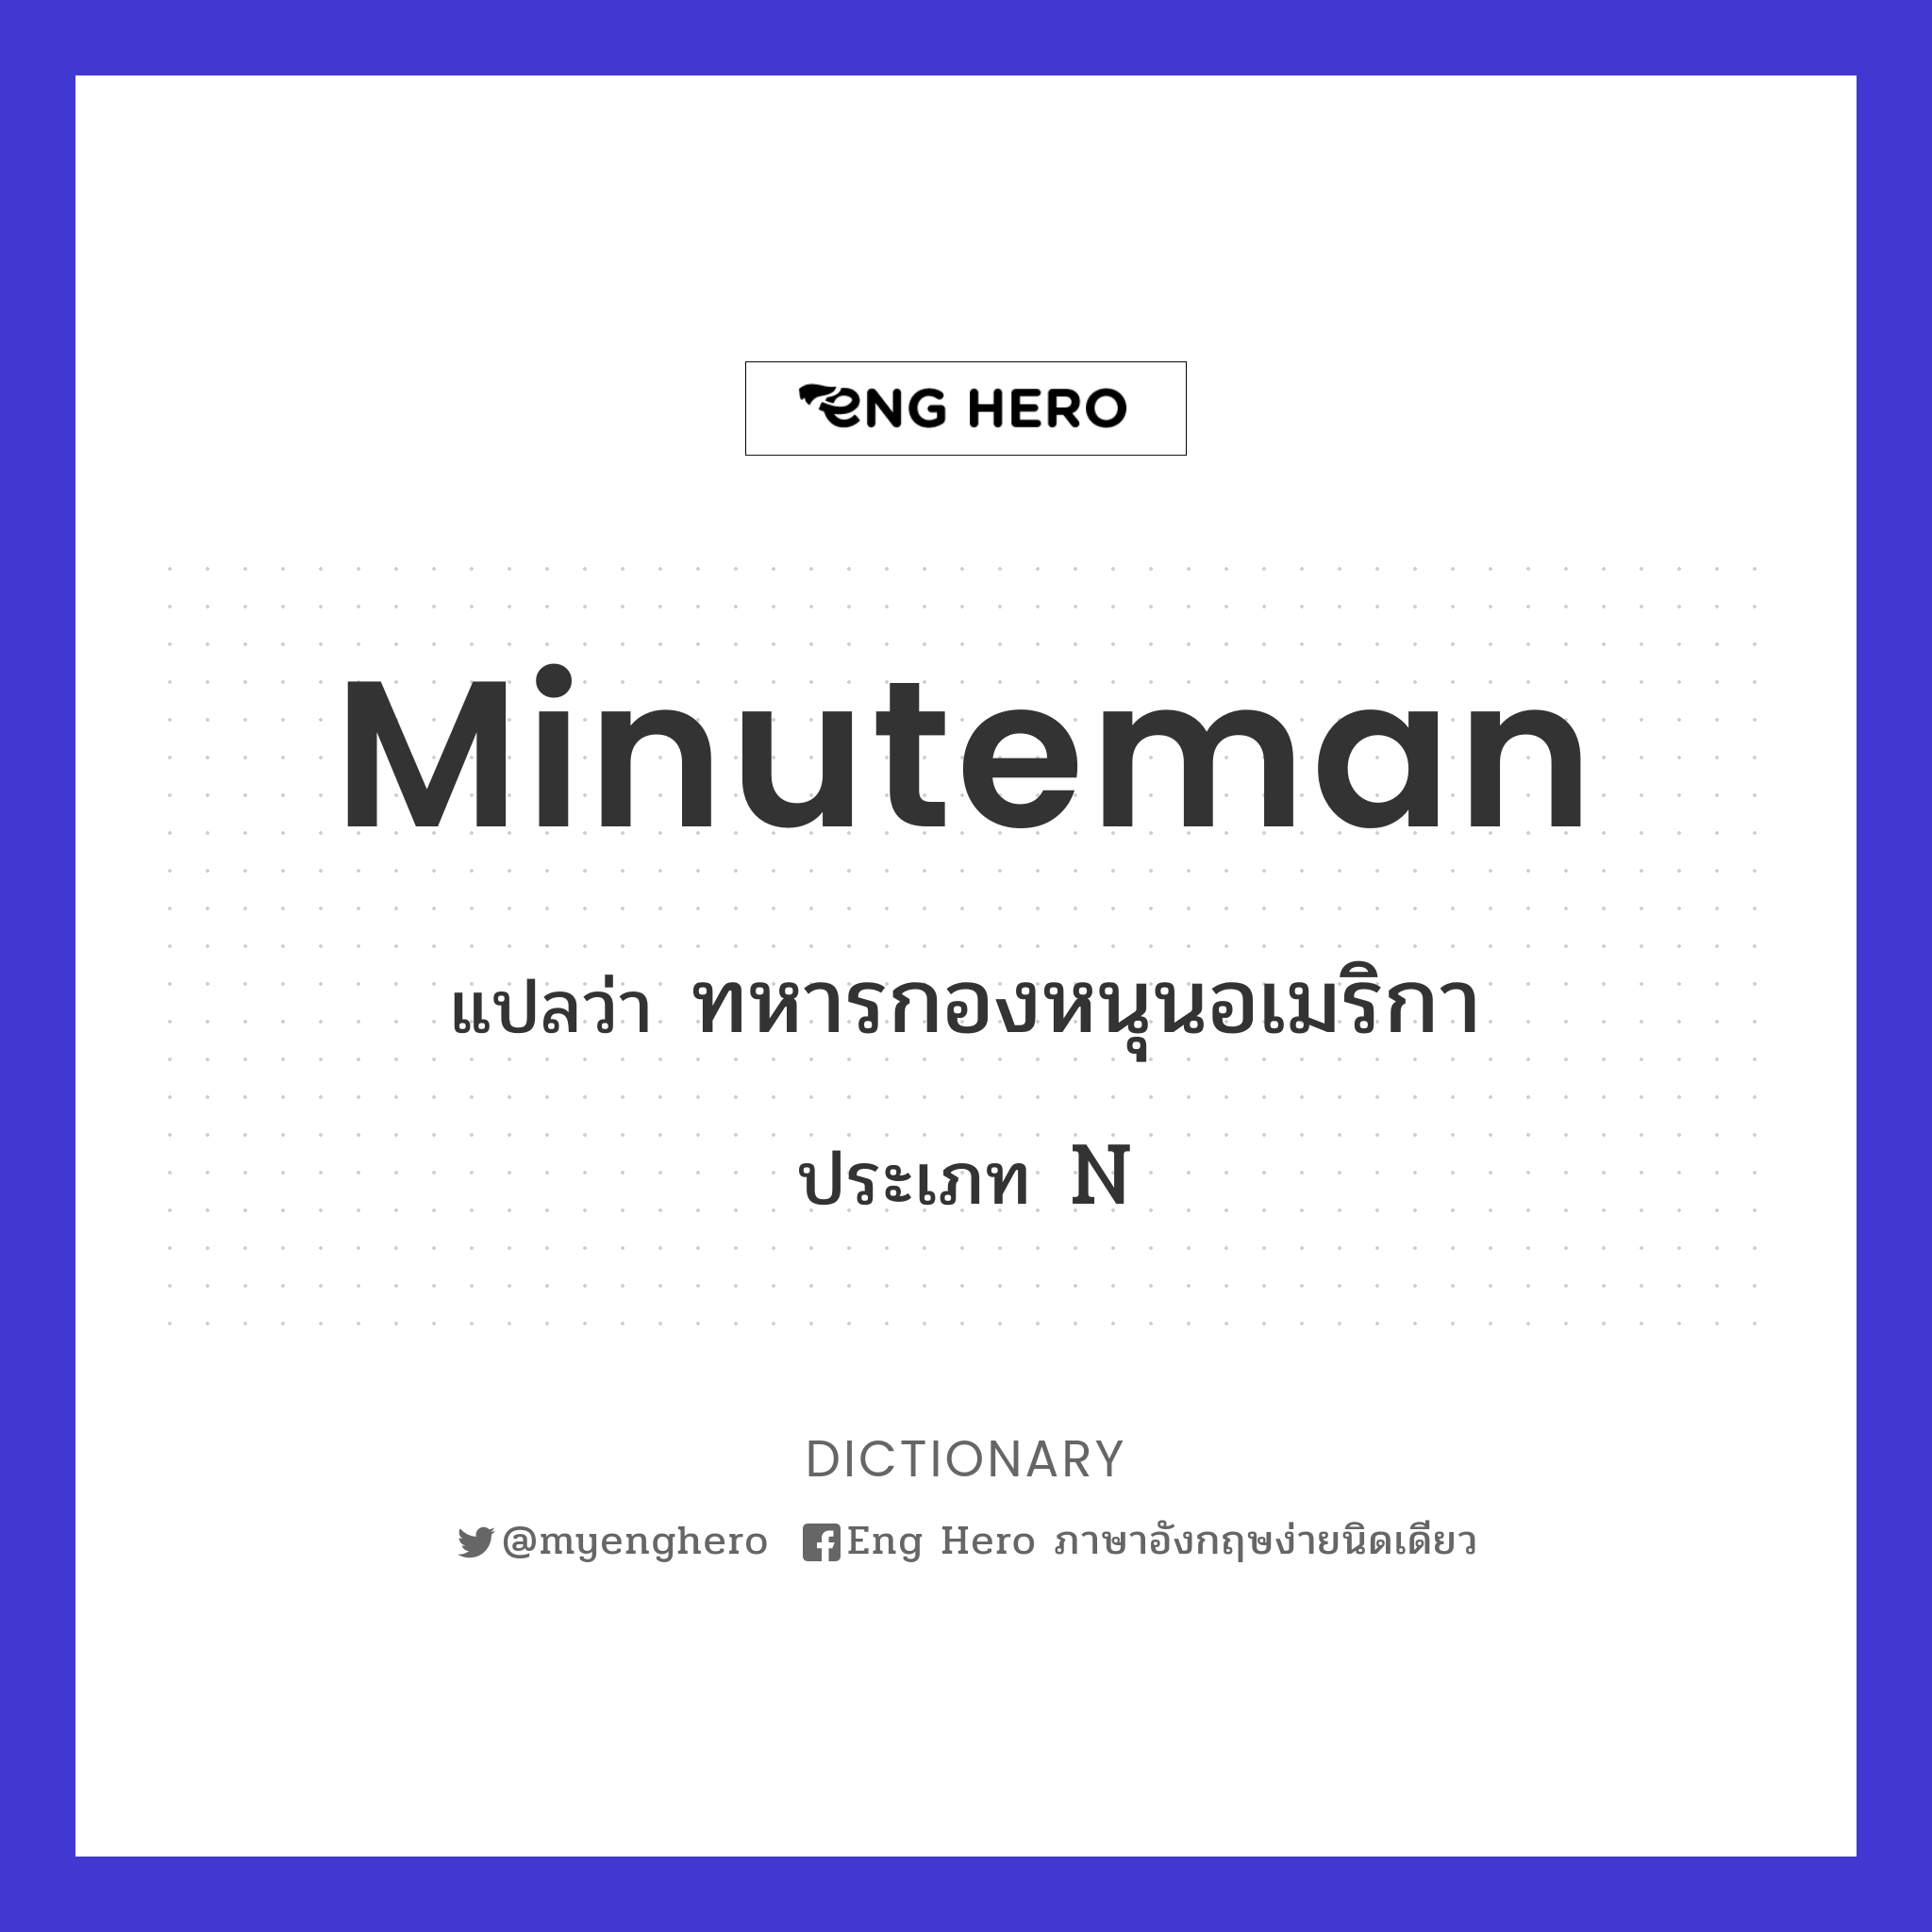 minuteman